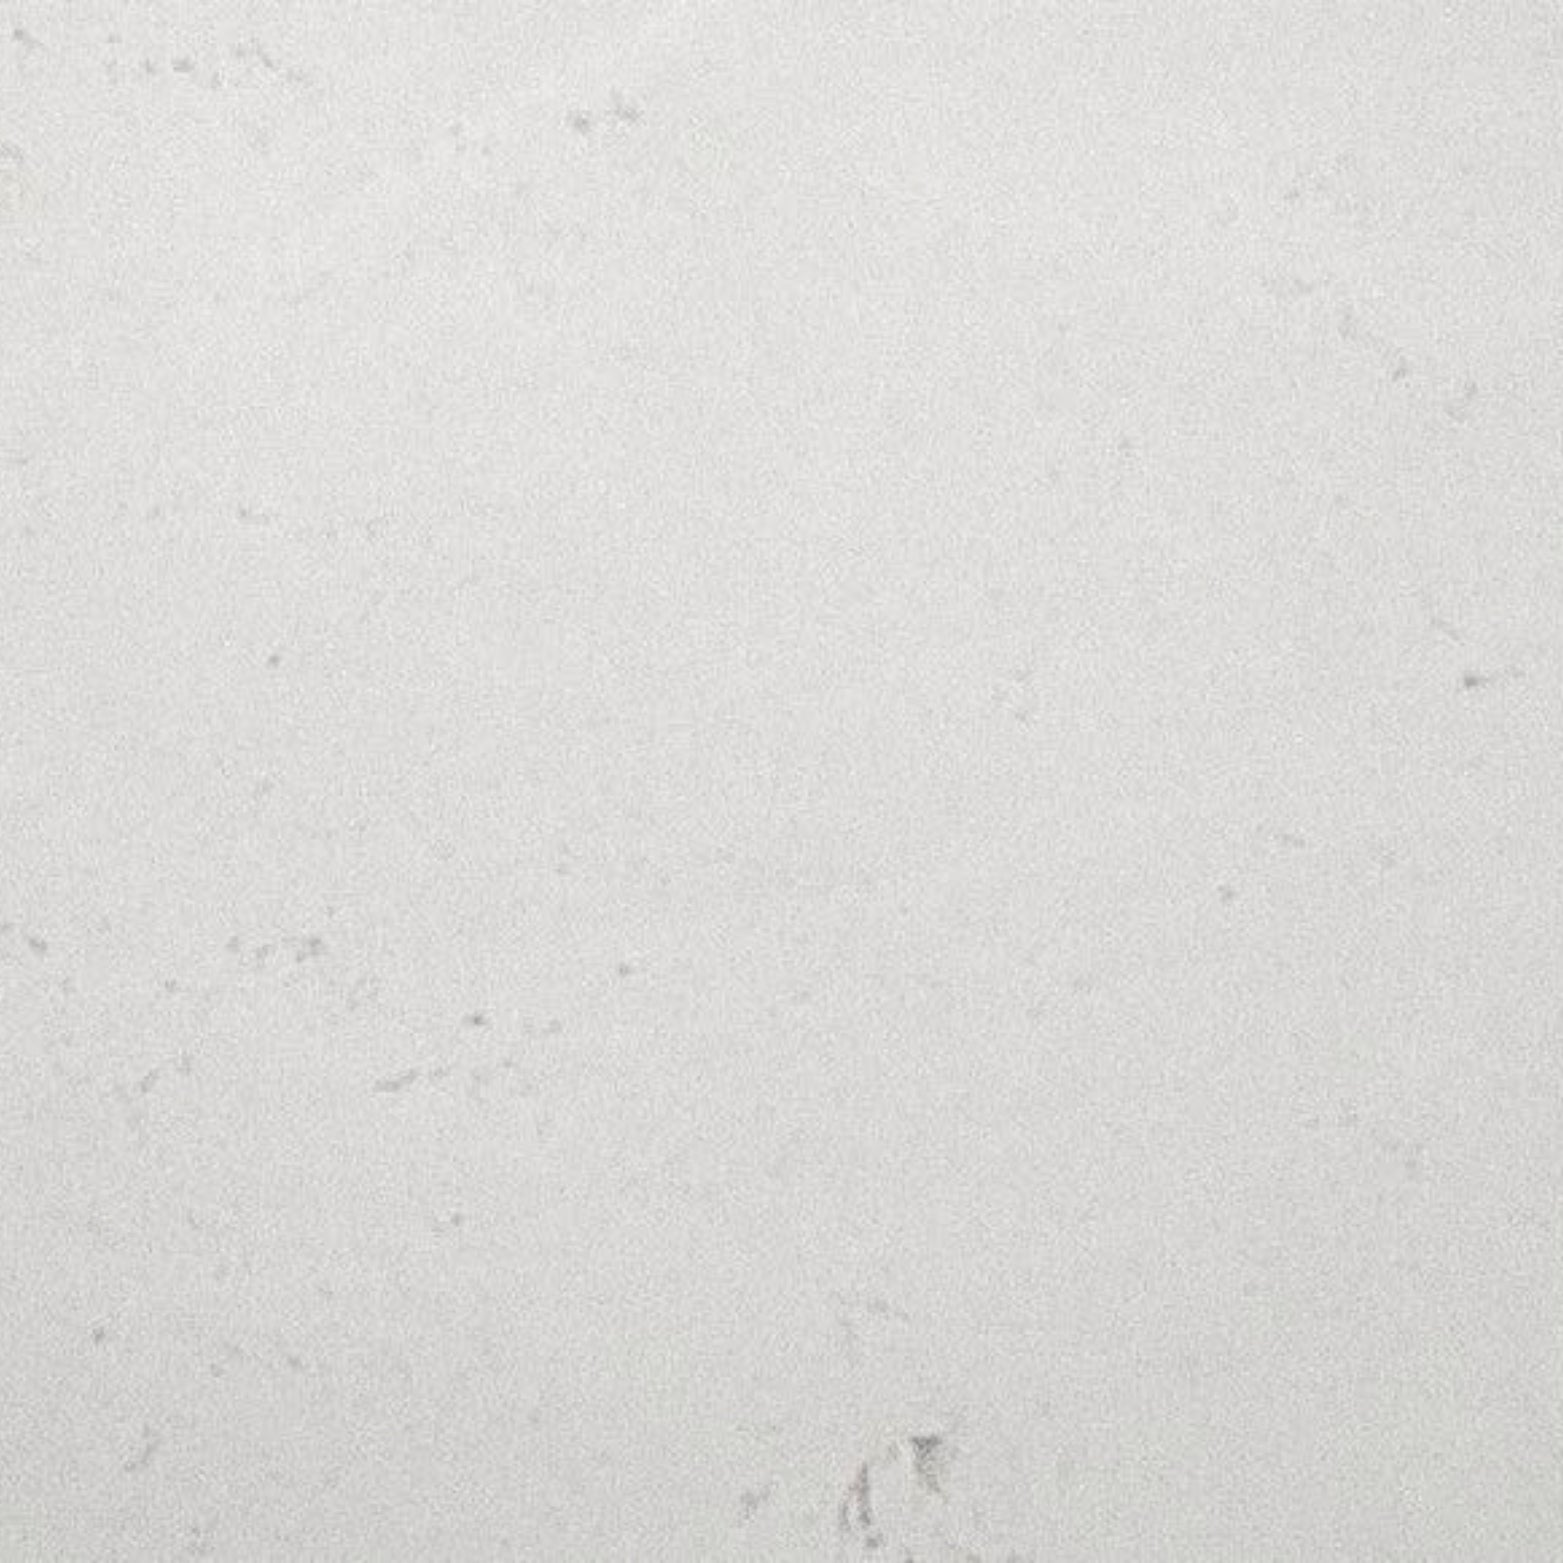 TIMBERLINE CALCUTTA SNOW SILKSURFACE TOP PAPER SAMPLE